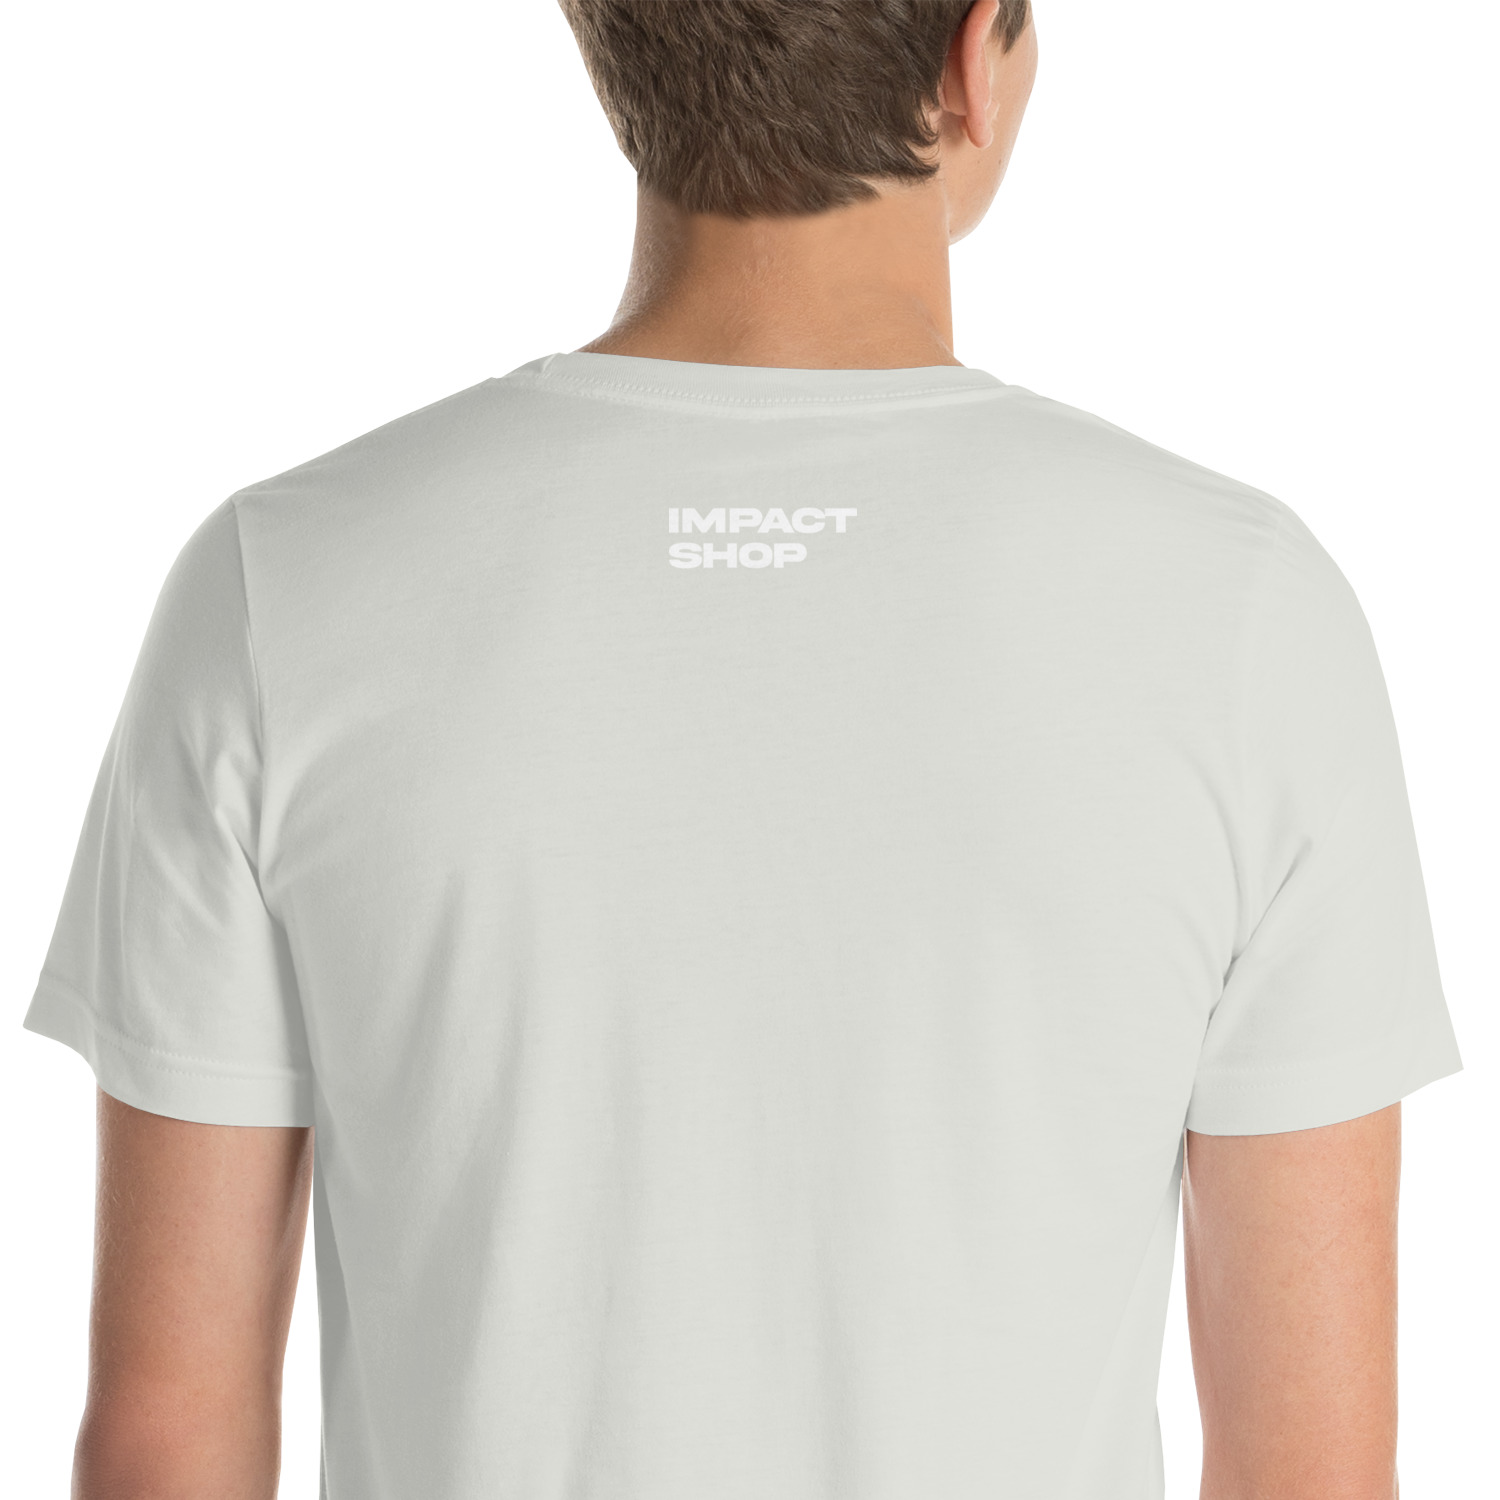 unisex-staple-t-shirt-silver-zoomed-in-63fced262222a.jpg